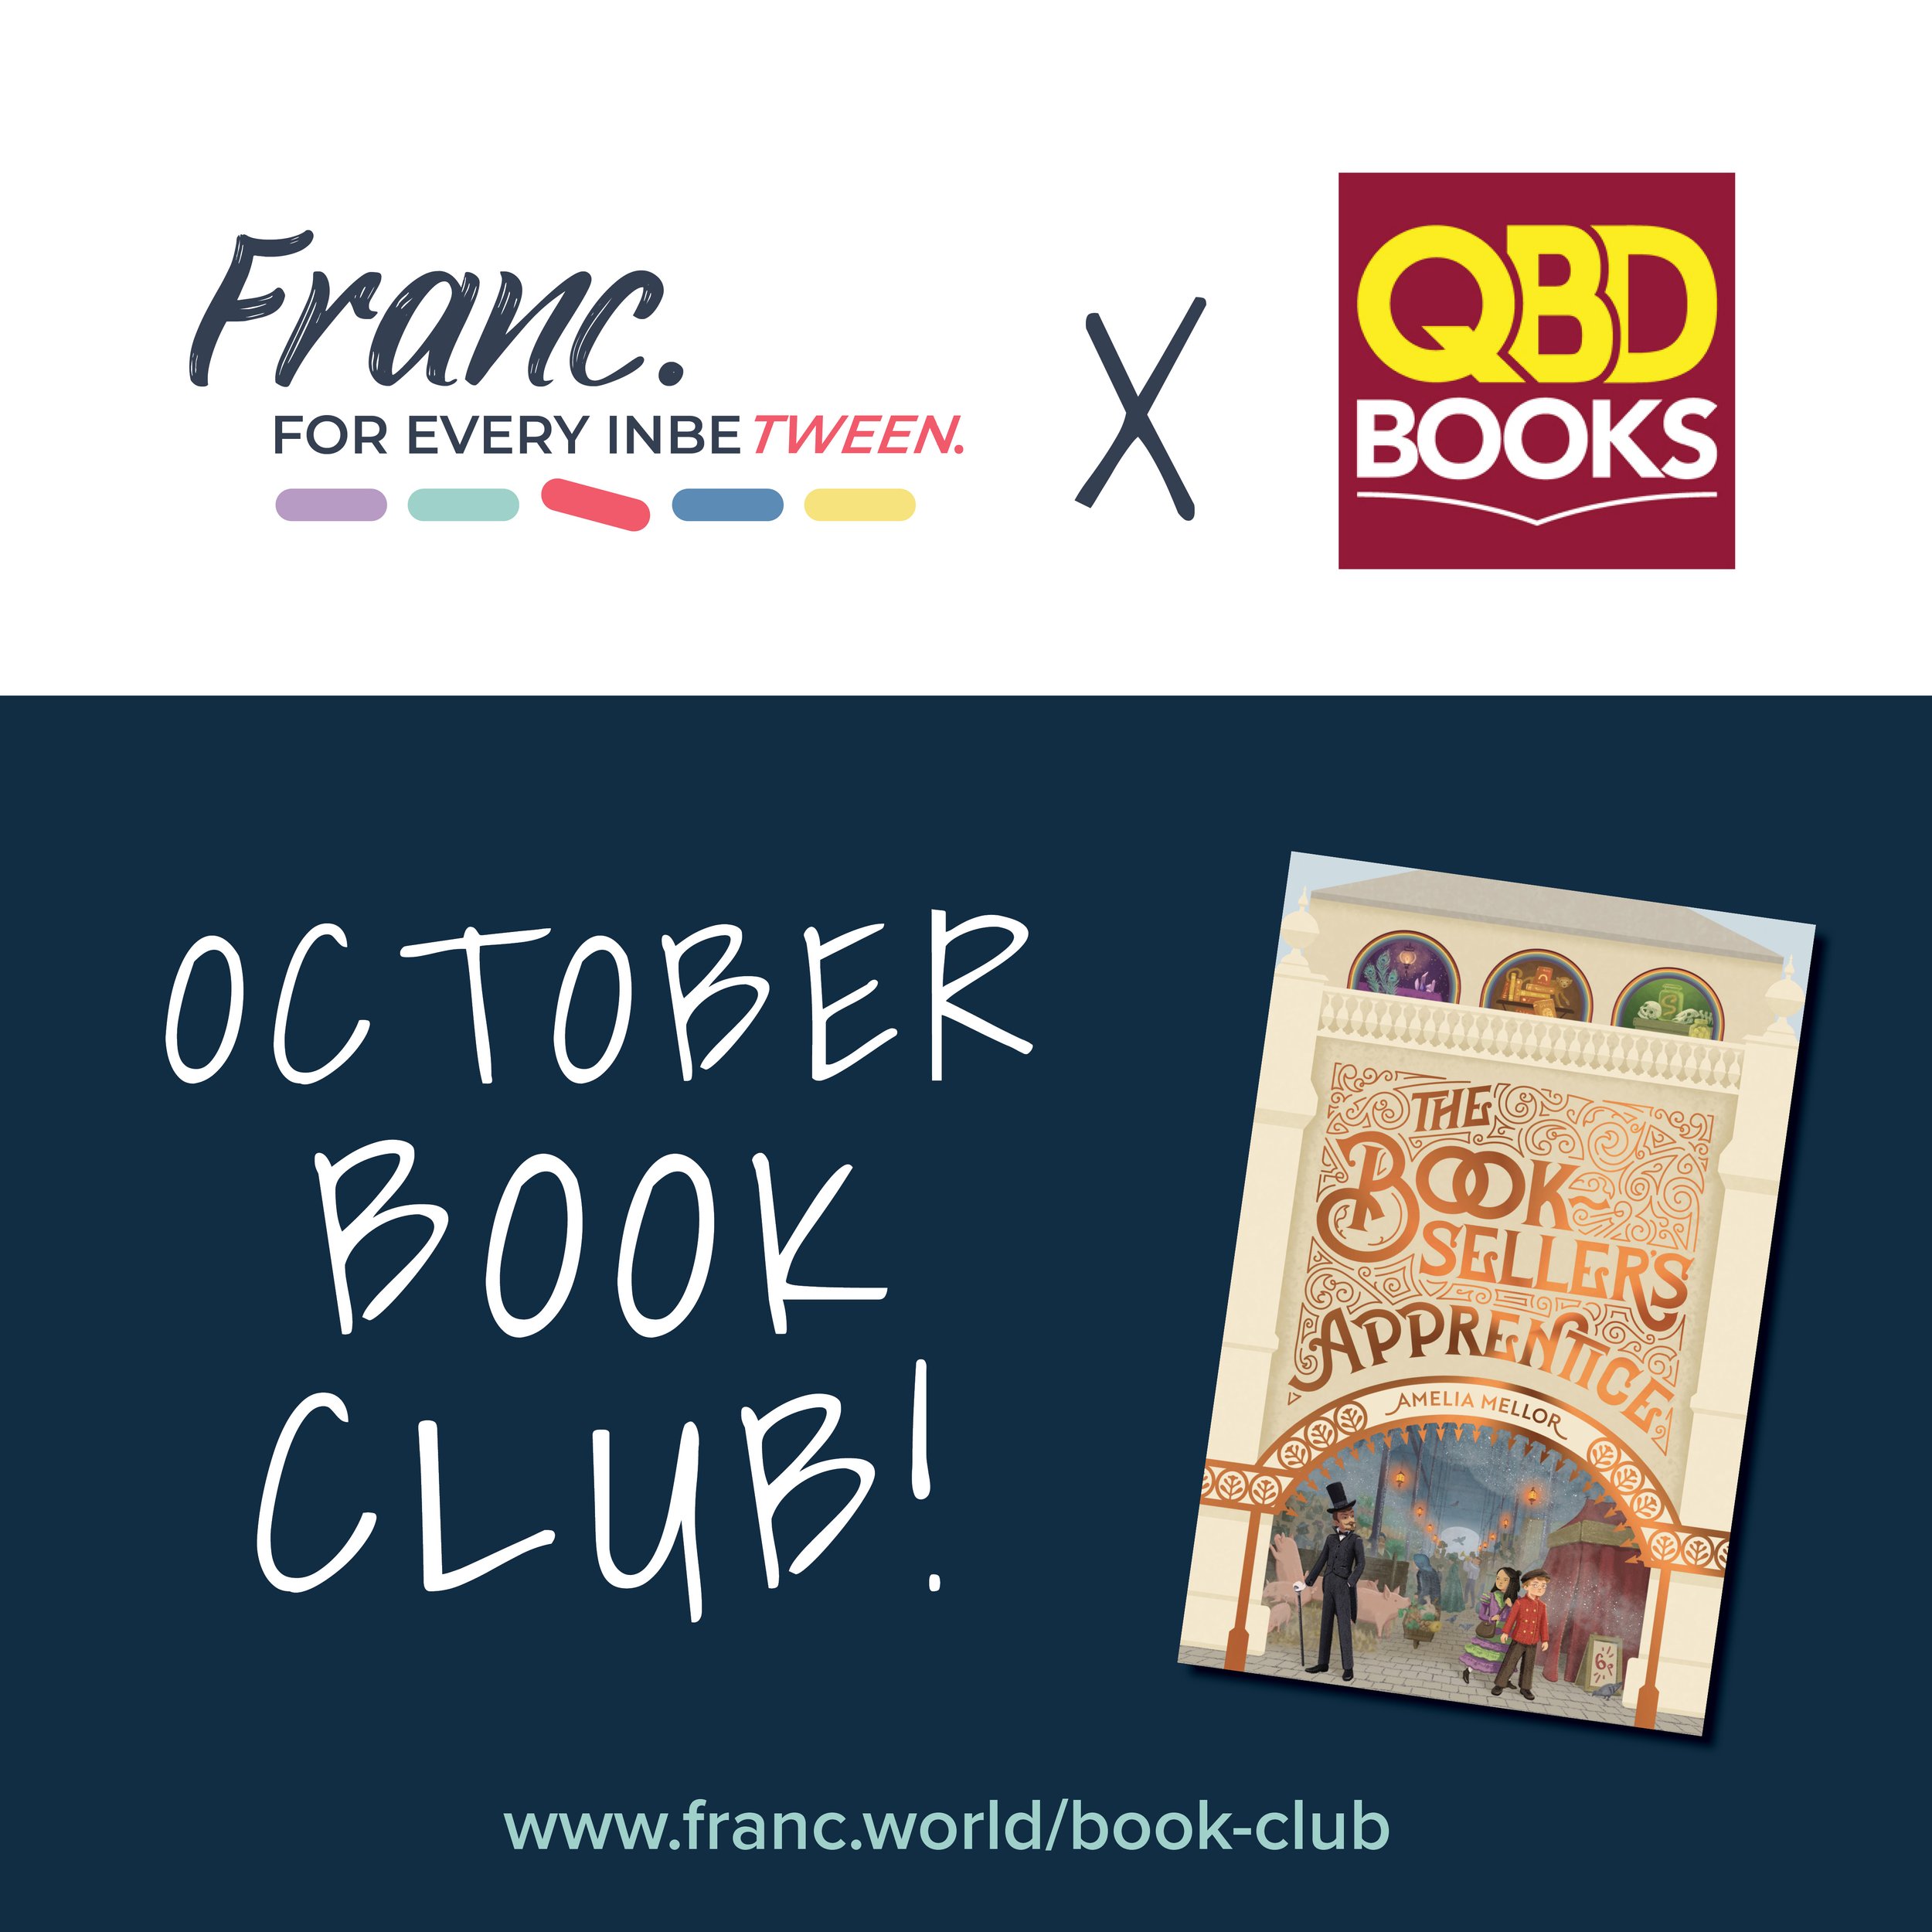 October Book Club Tiles.jpg